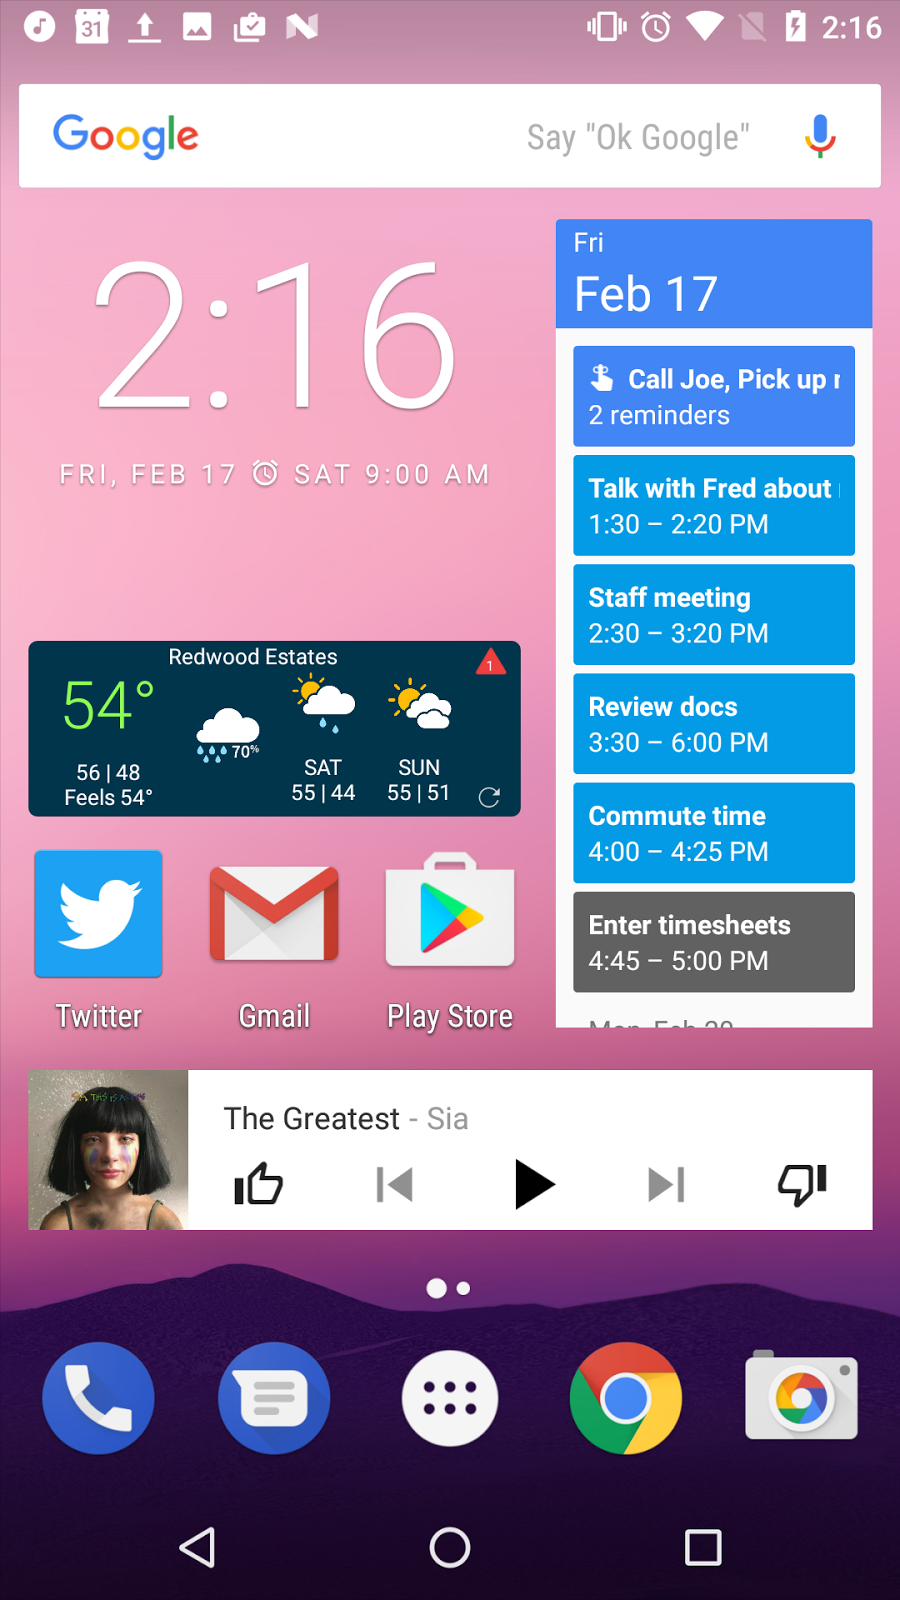  Android app widgets